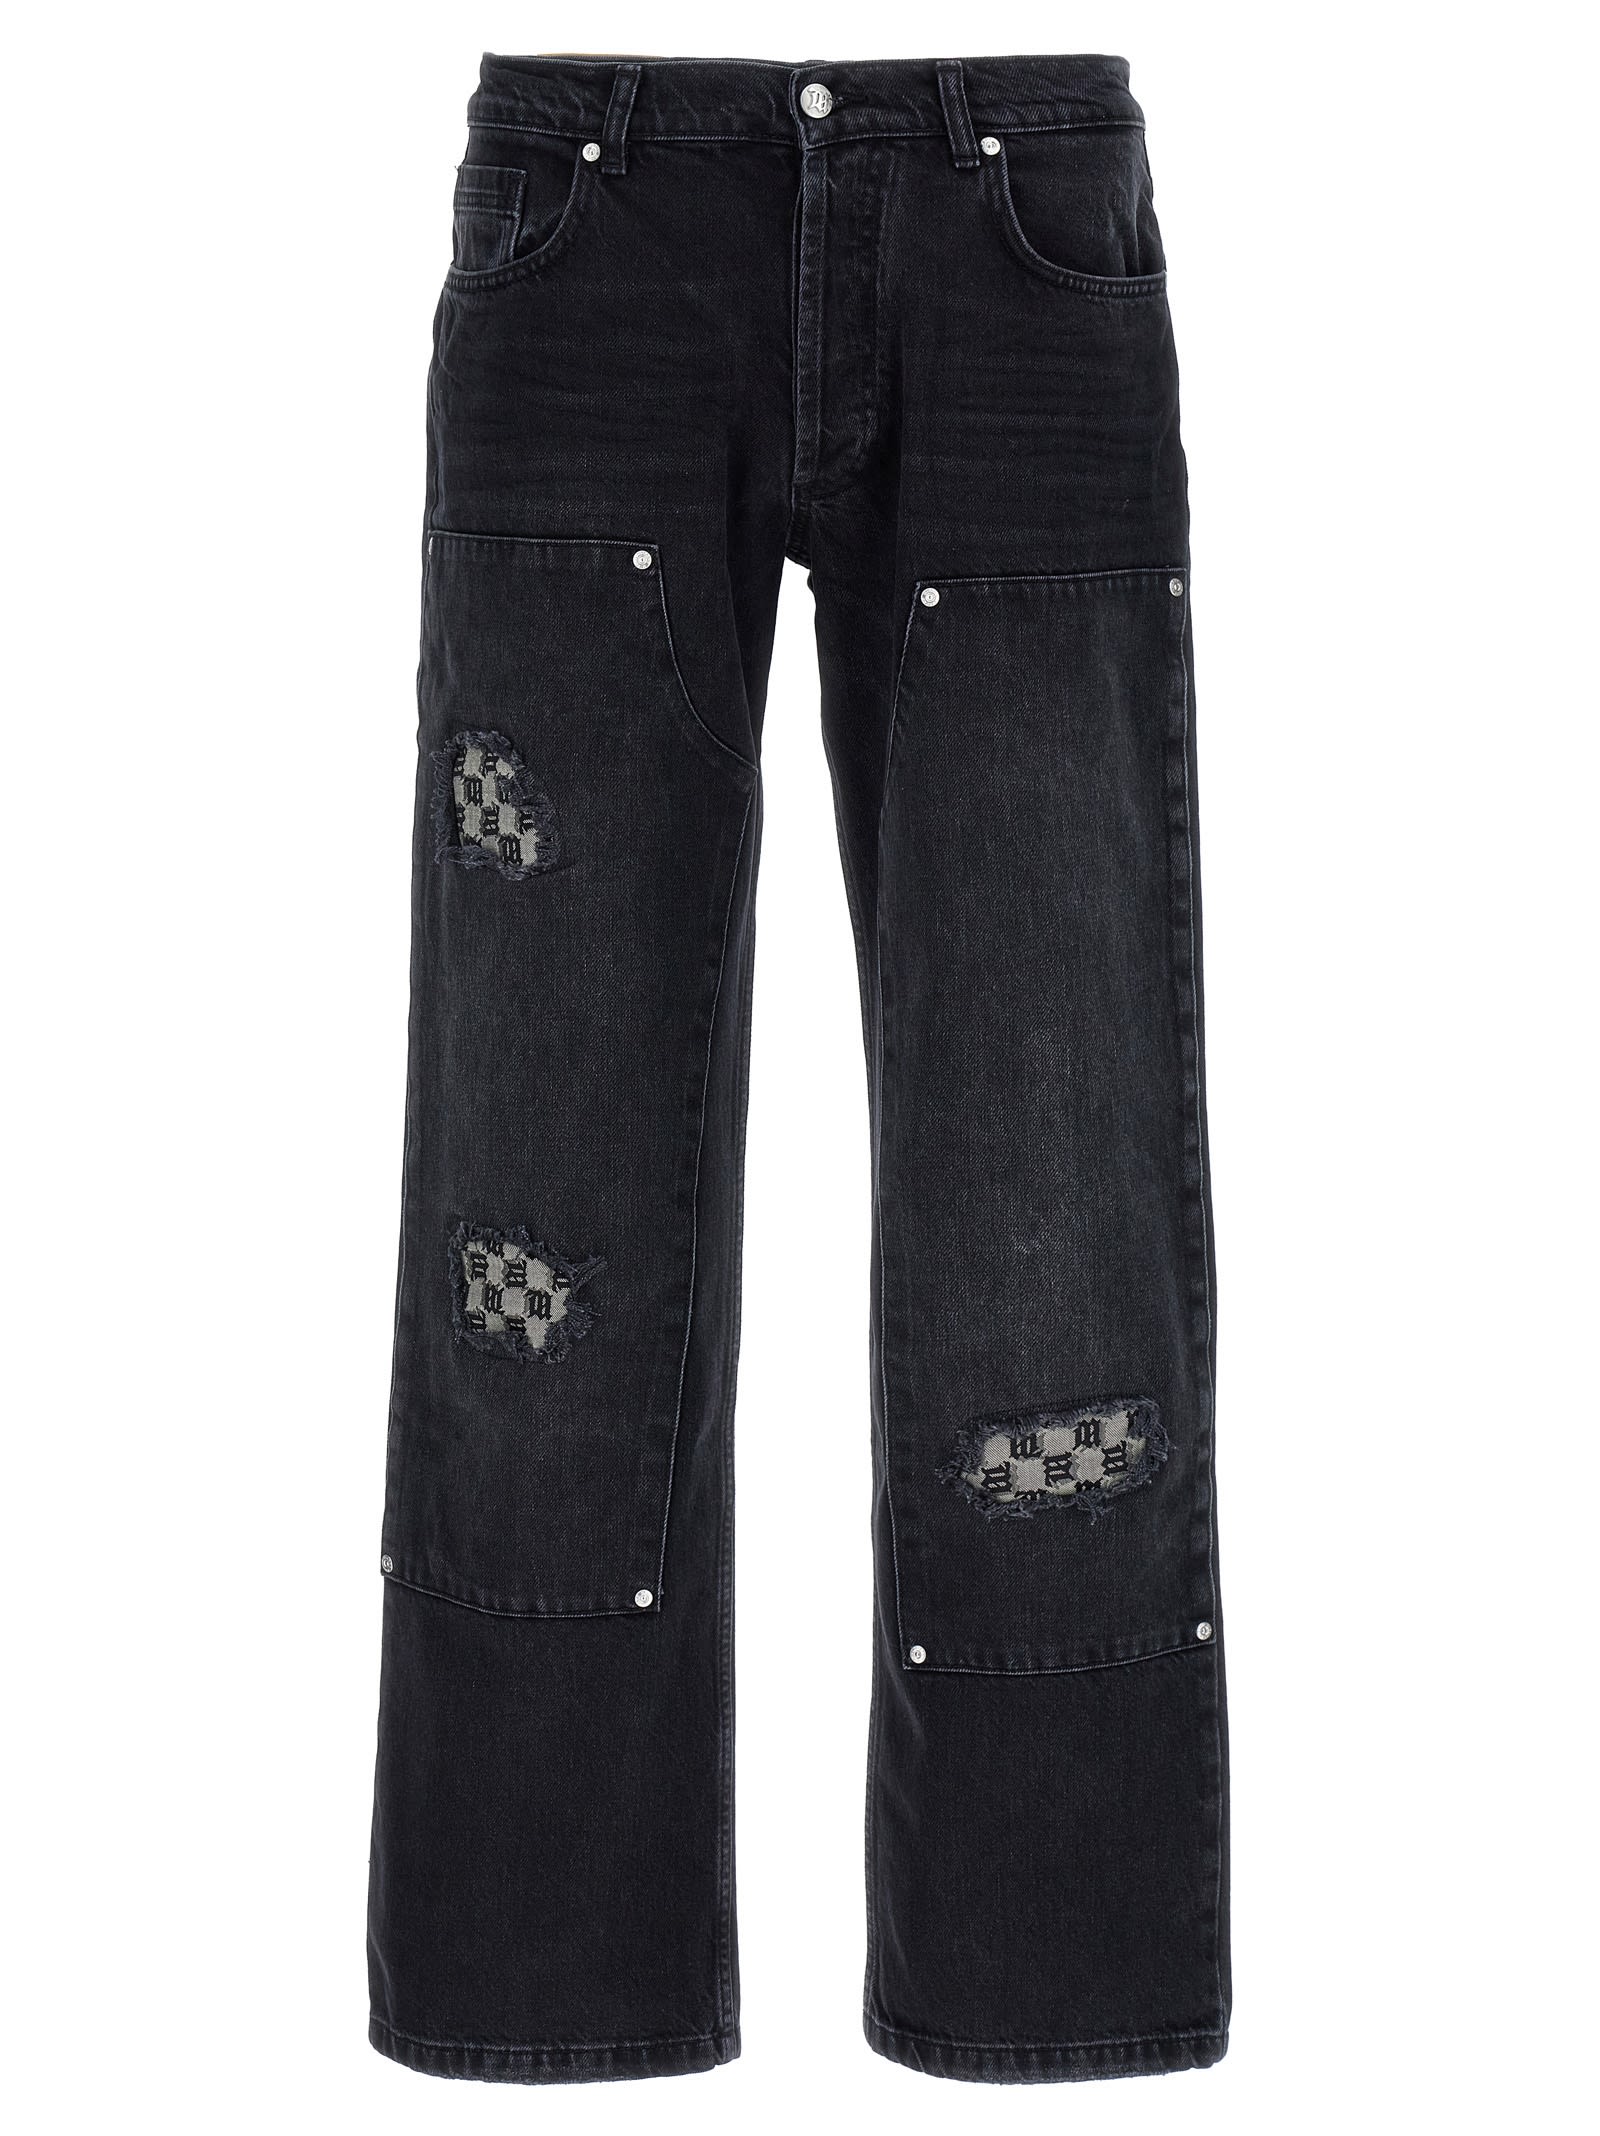 MISBHV Monogram Carpenter Trousers Men Jeans Black in Size:M